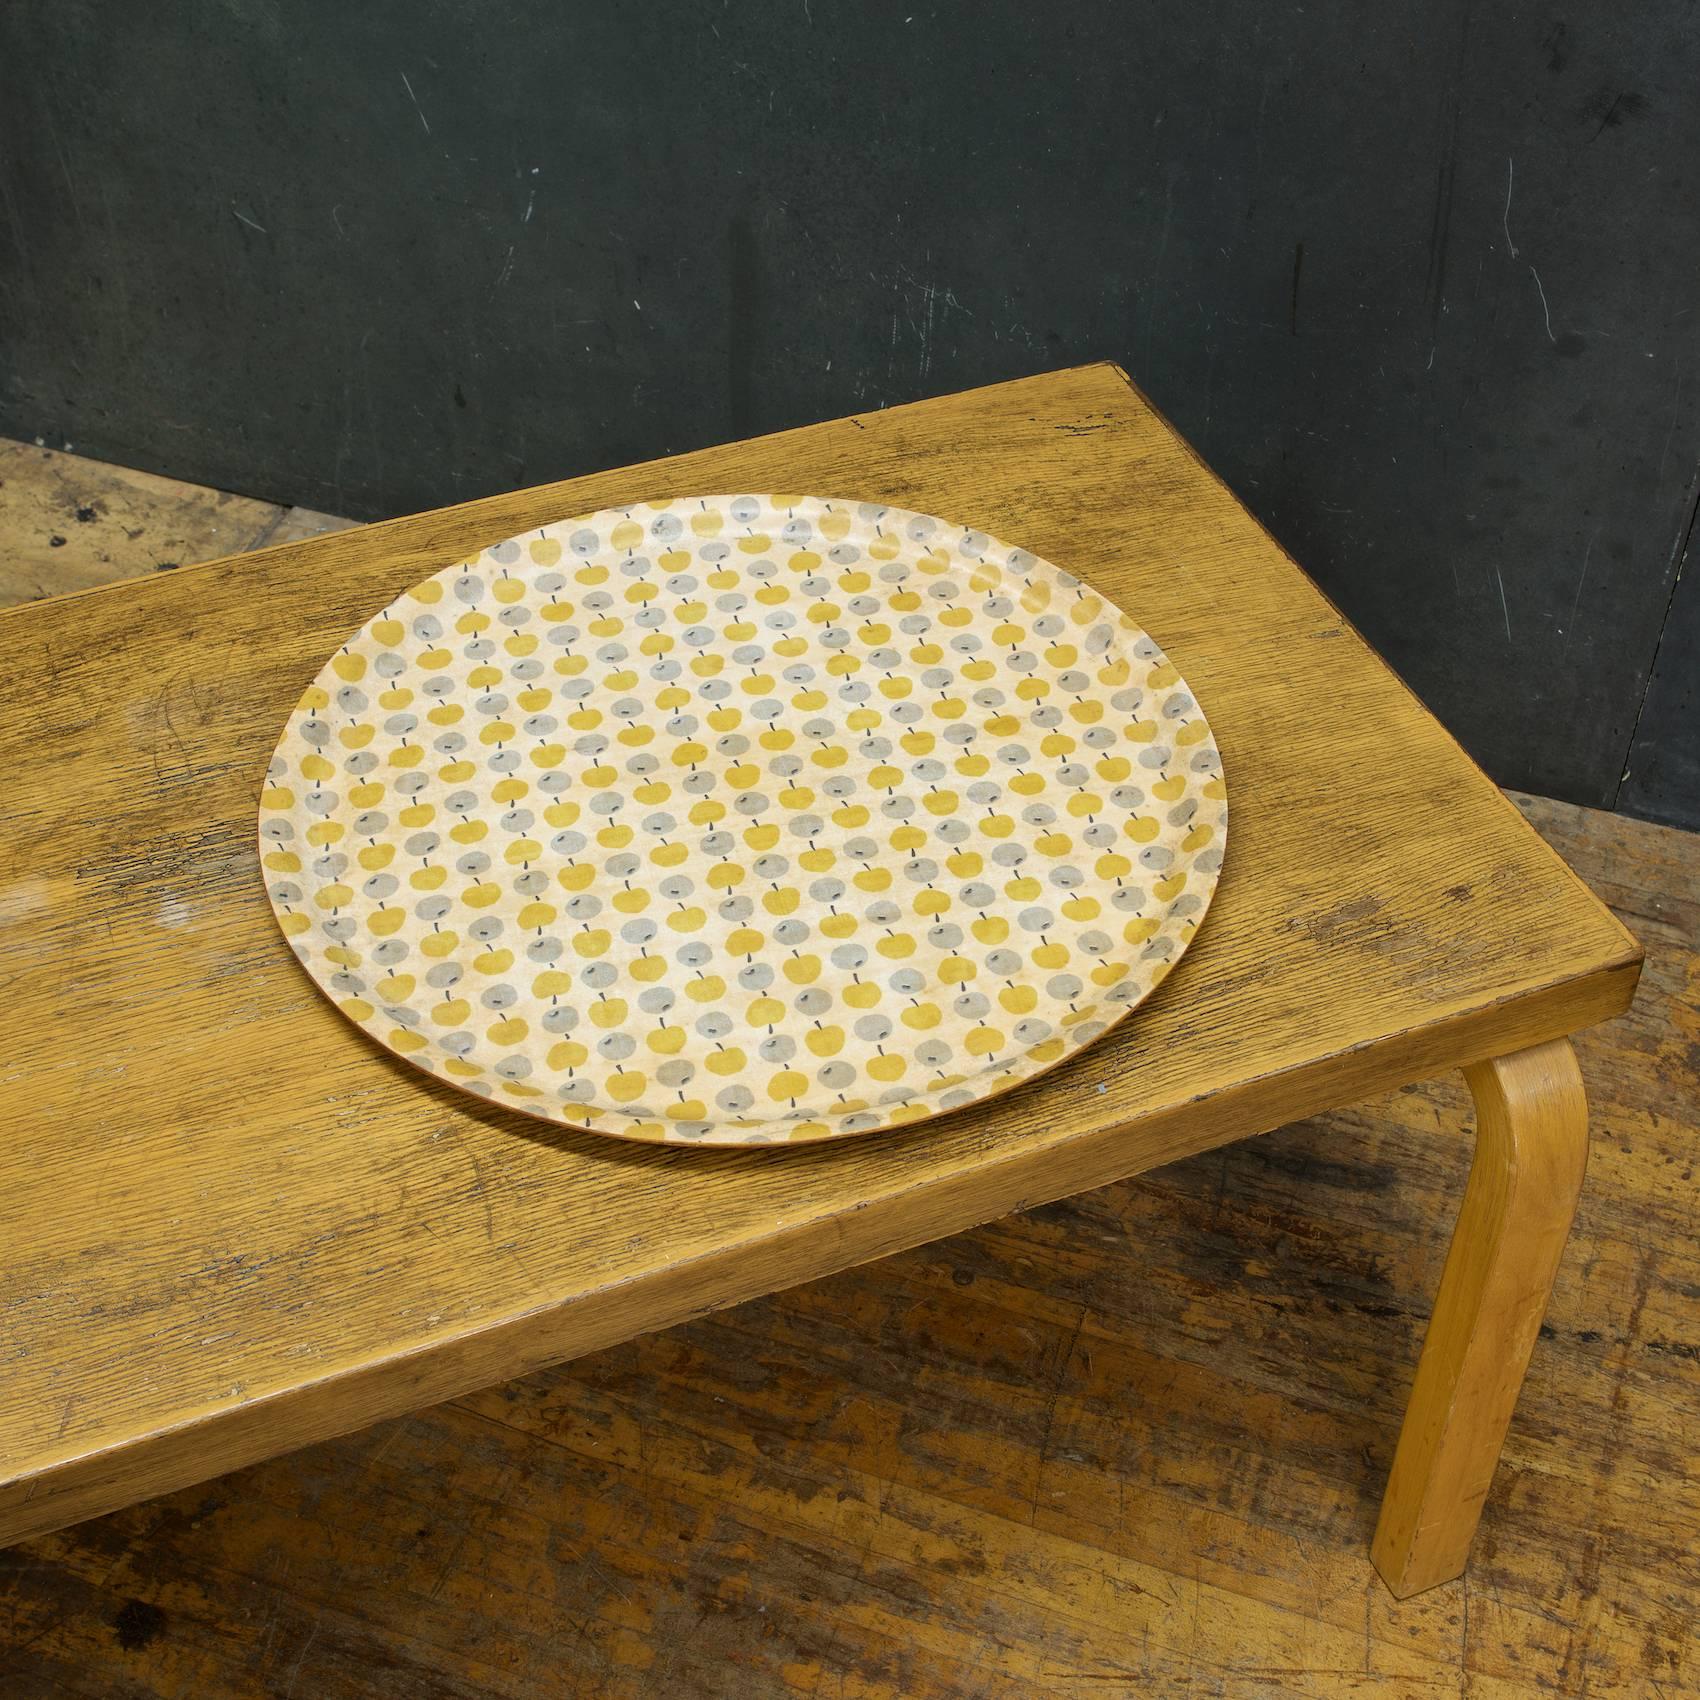 Laminated Early Aalto Alvar designed Model #81 Table by Finsven Sweden